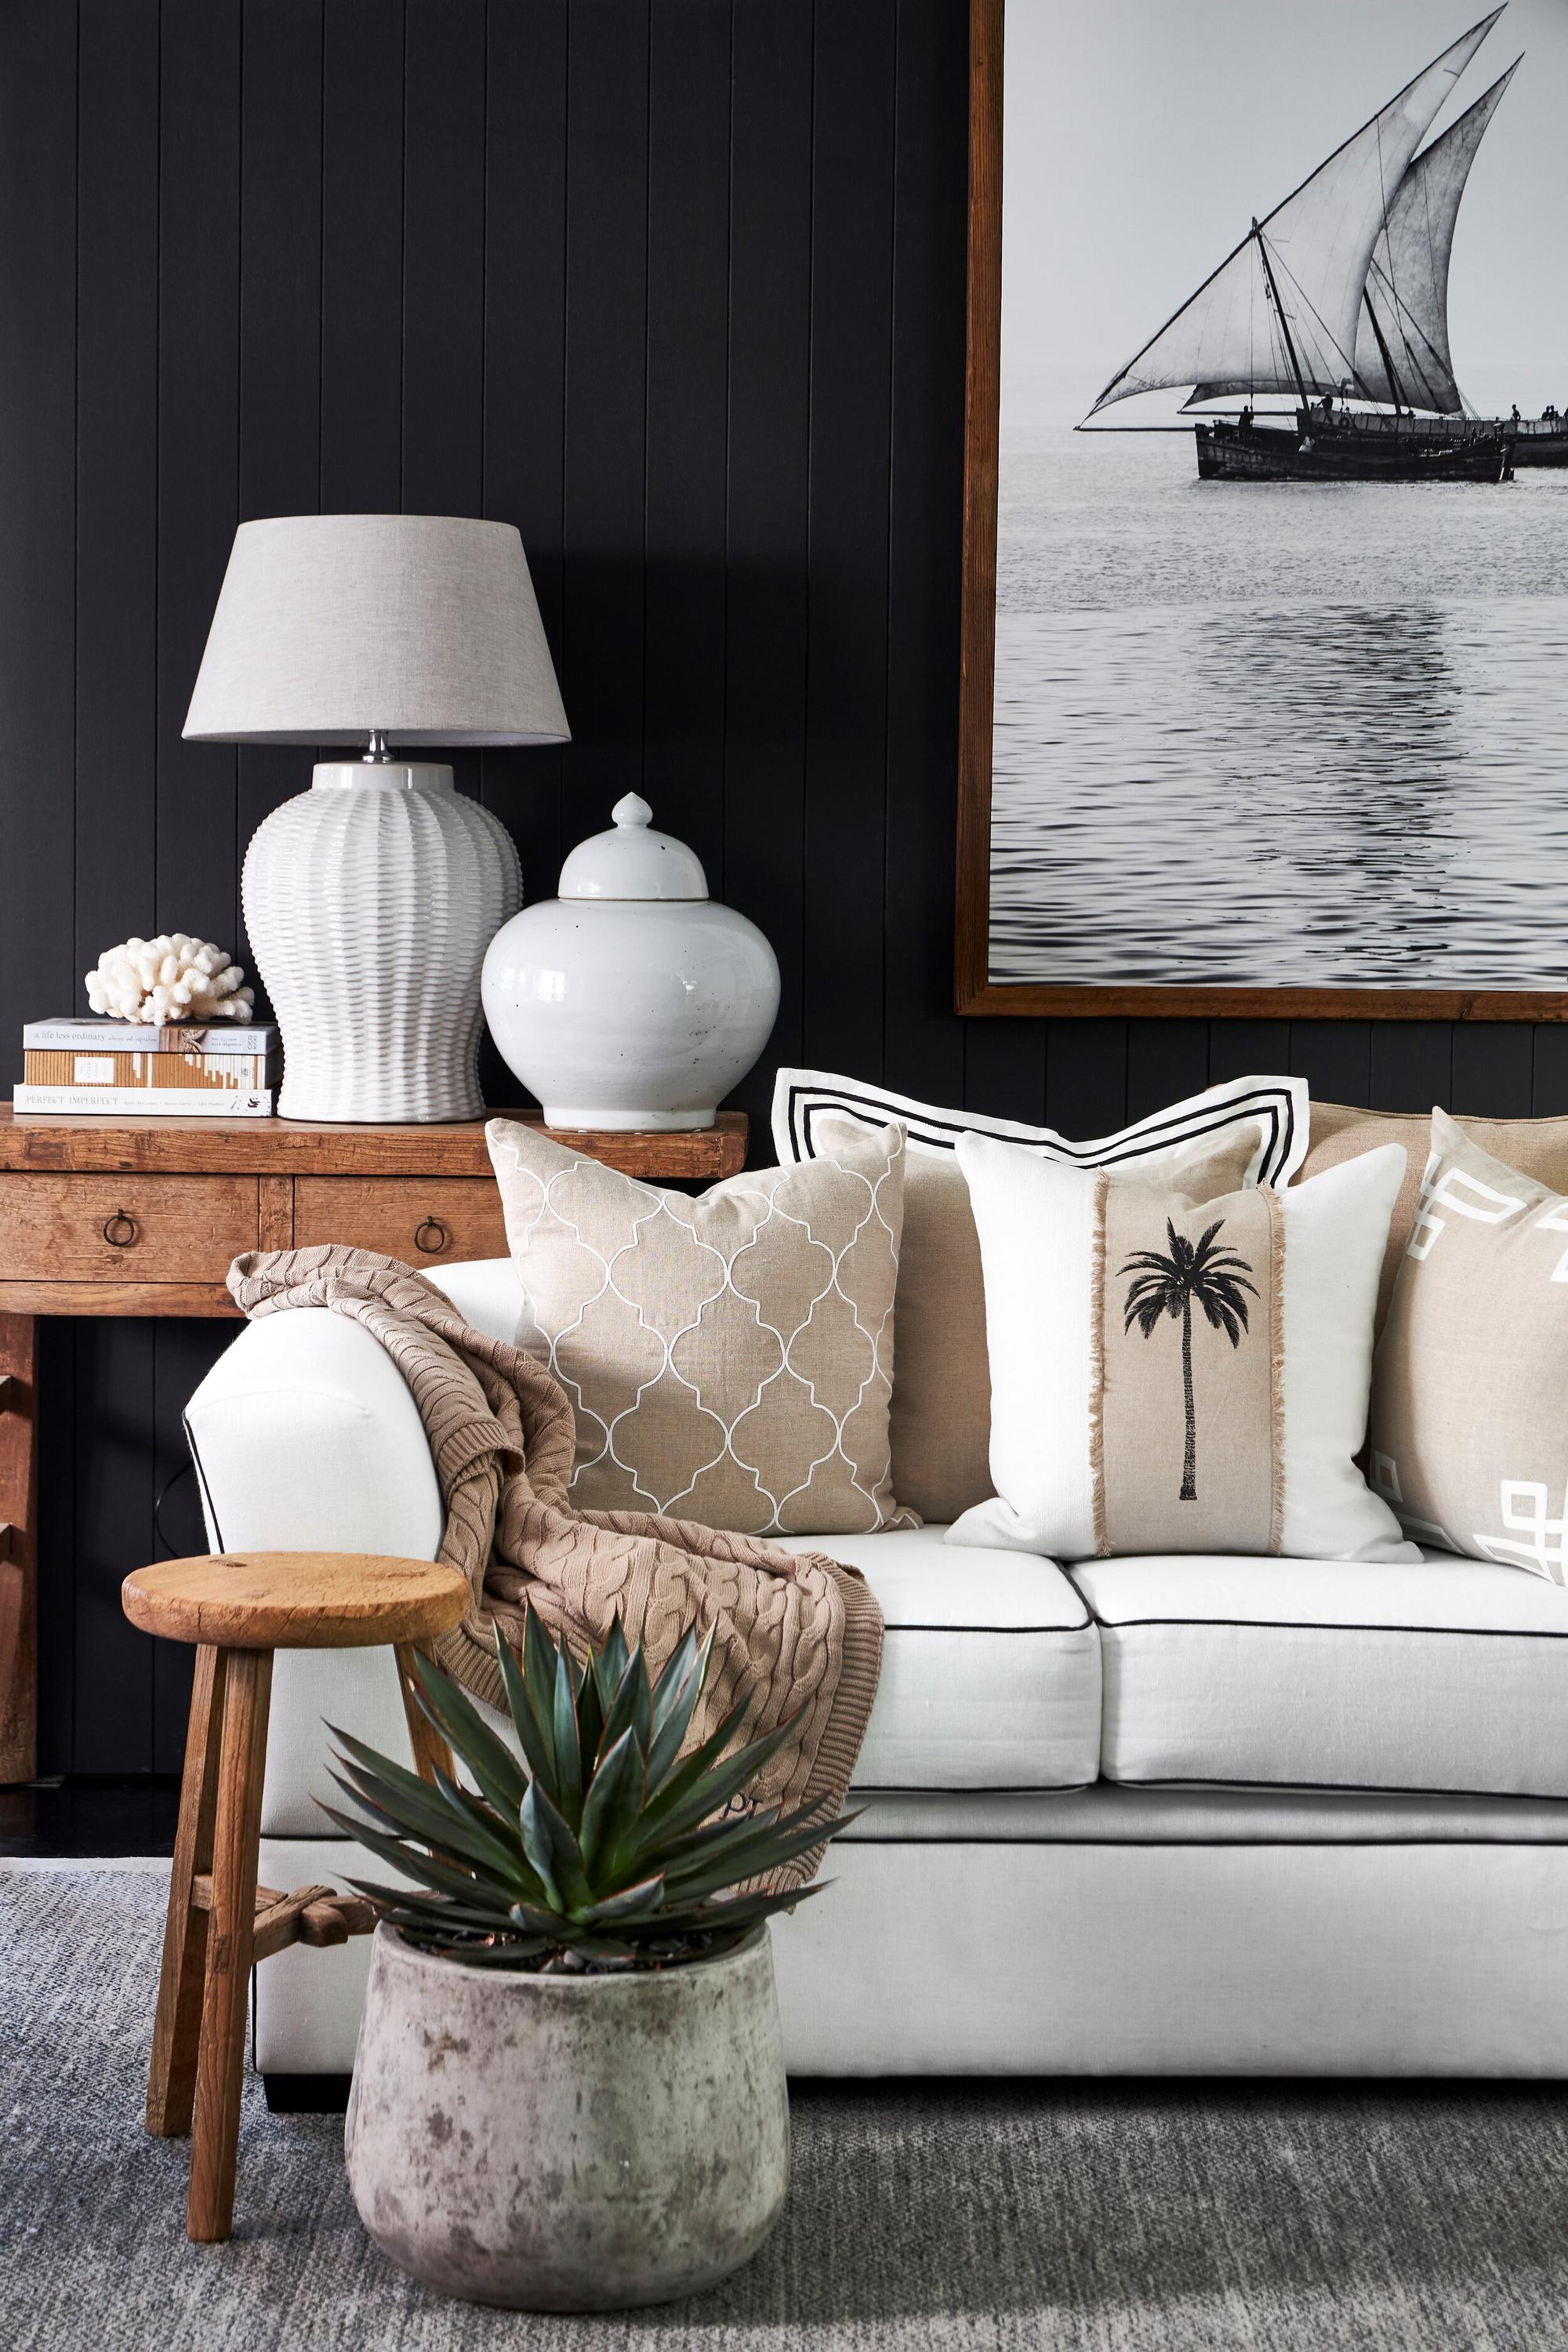 Island Home Interiors - Bringing Coastal Style to You